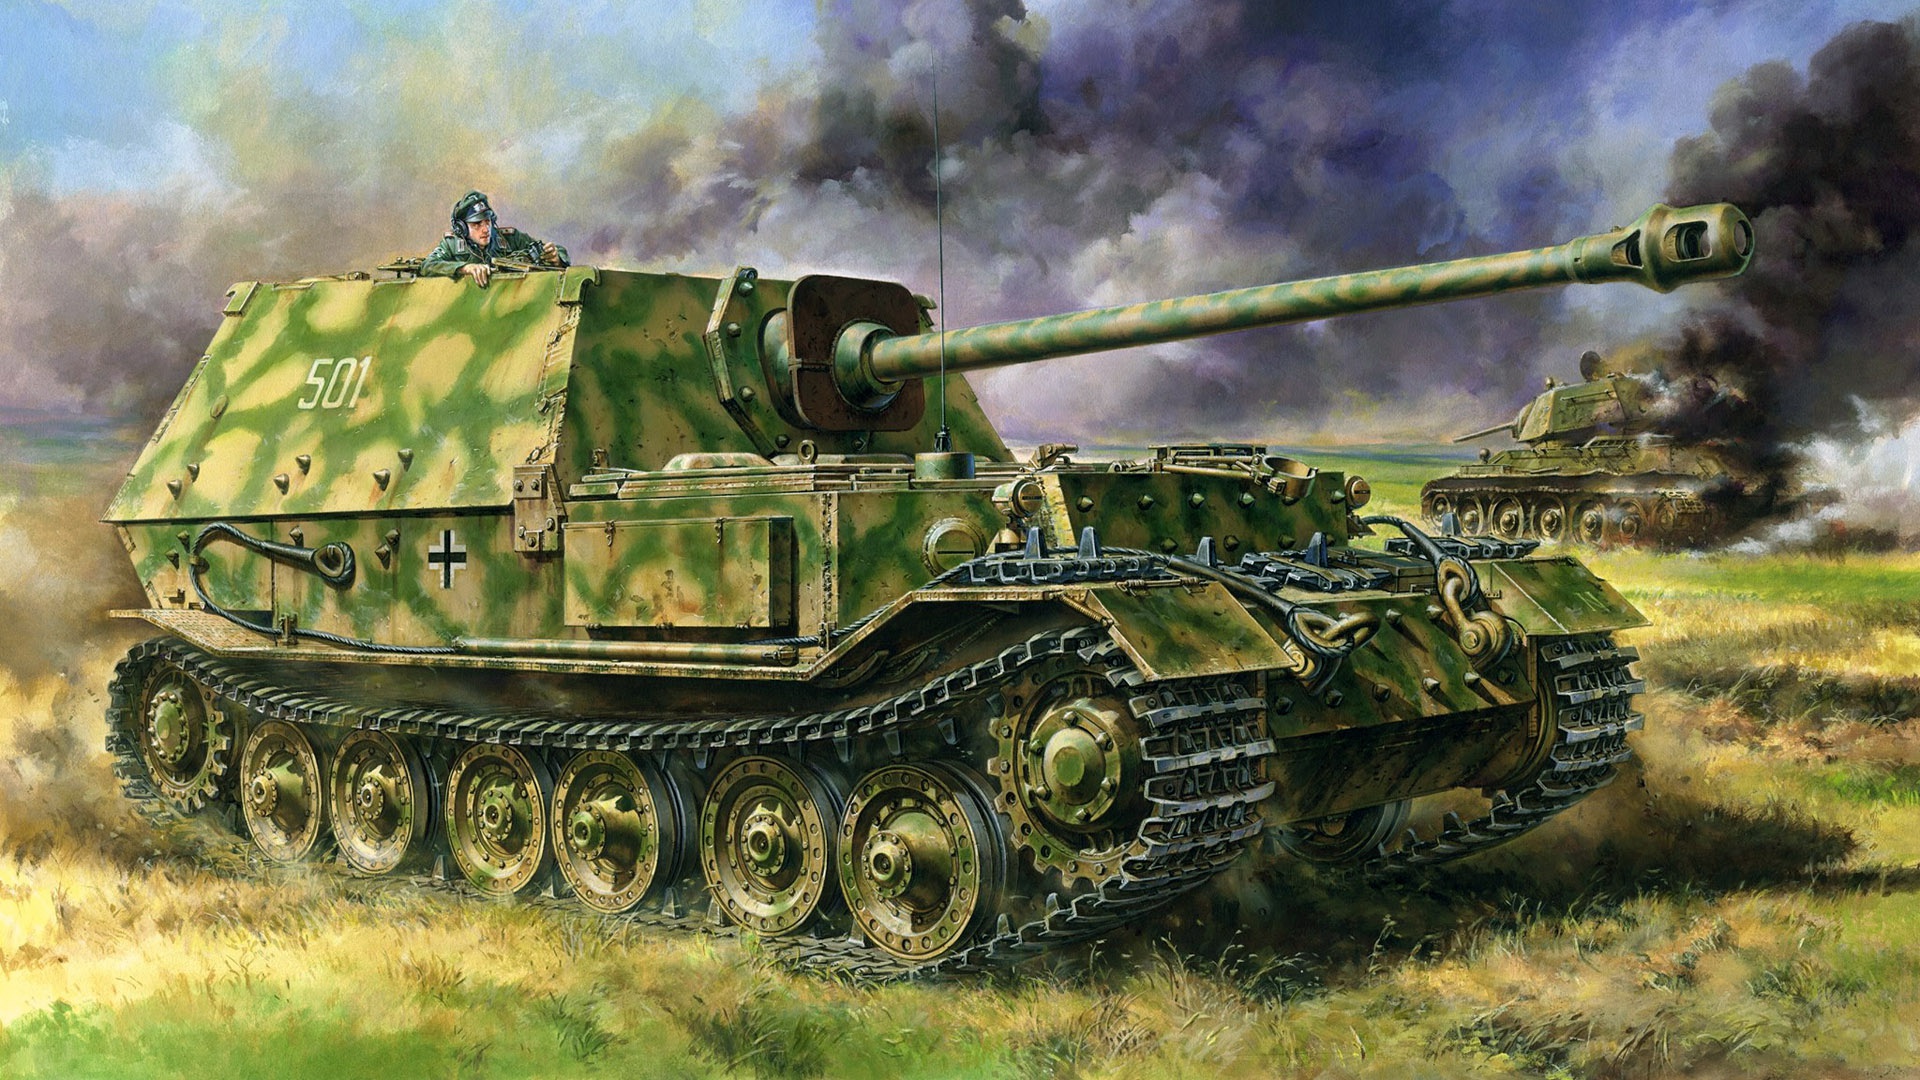 General 1920x1080 Wehrmacht military Nazi vehicle artwork World War II war tank Elefant (tank destroyer) German tanks